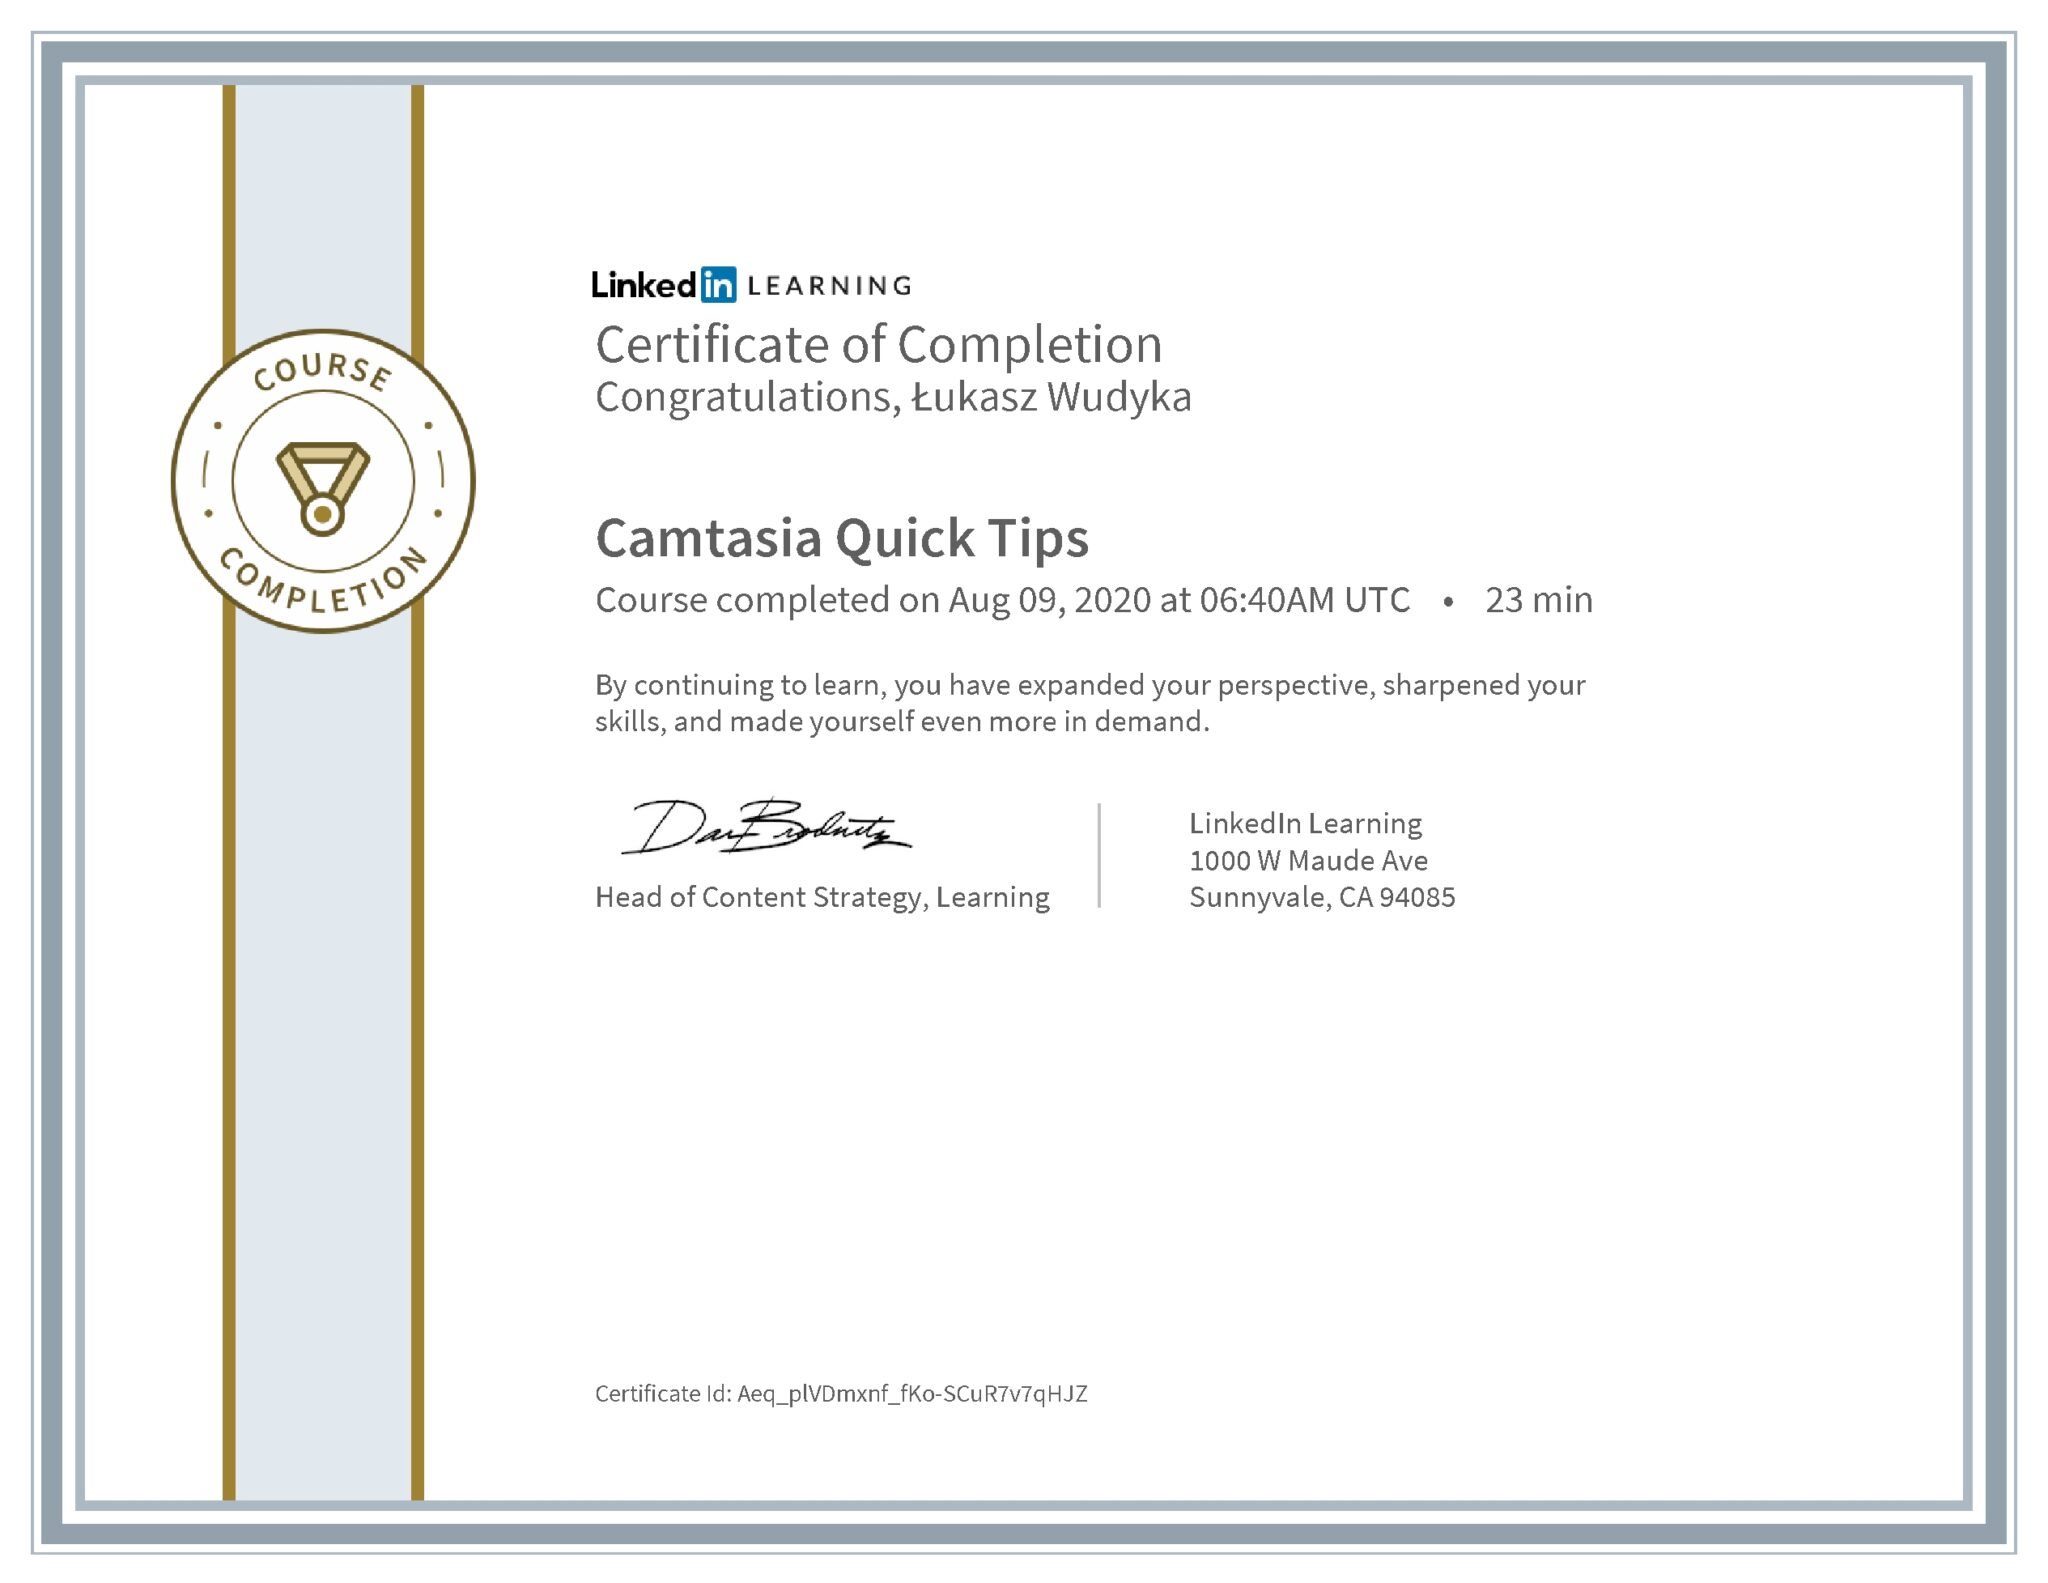 Łukasz Wudyka certyfikat LinkedIn Camtasia Quick Tips